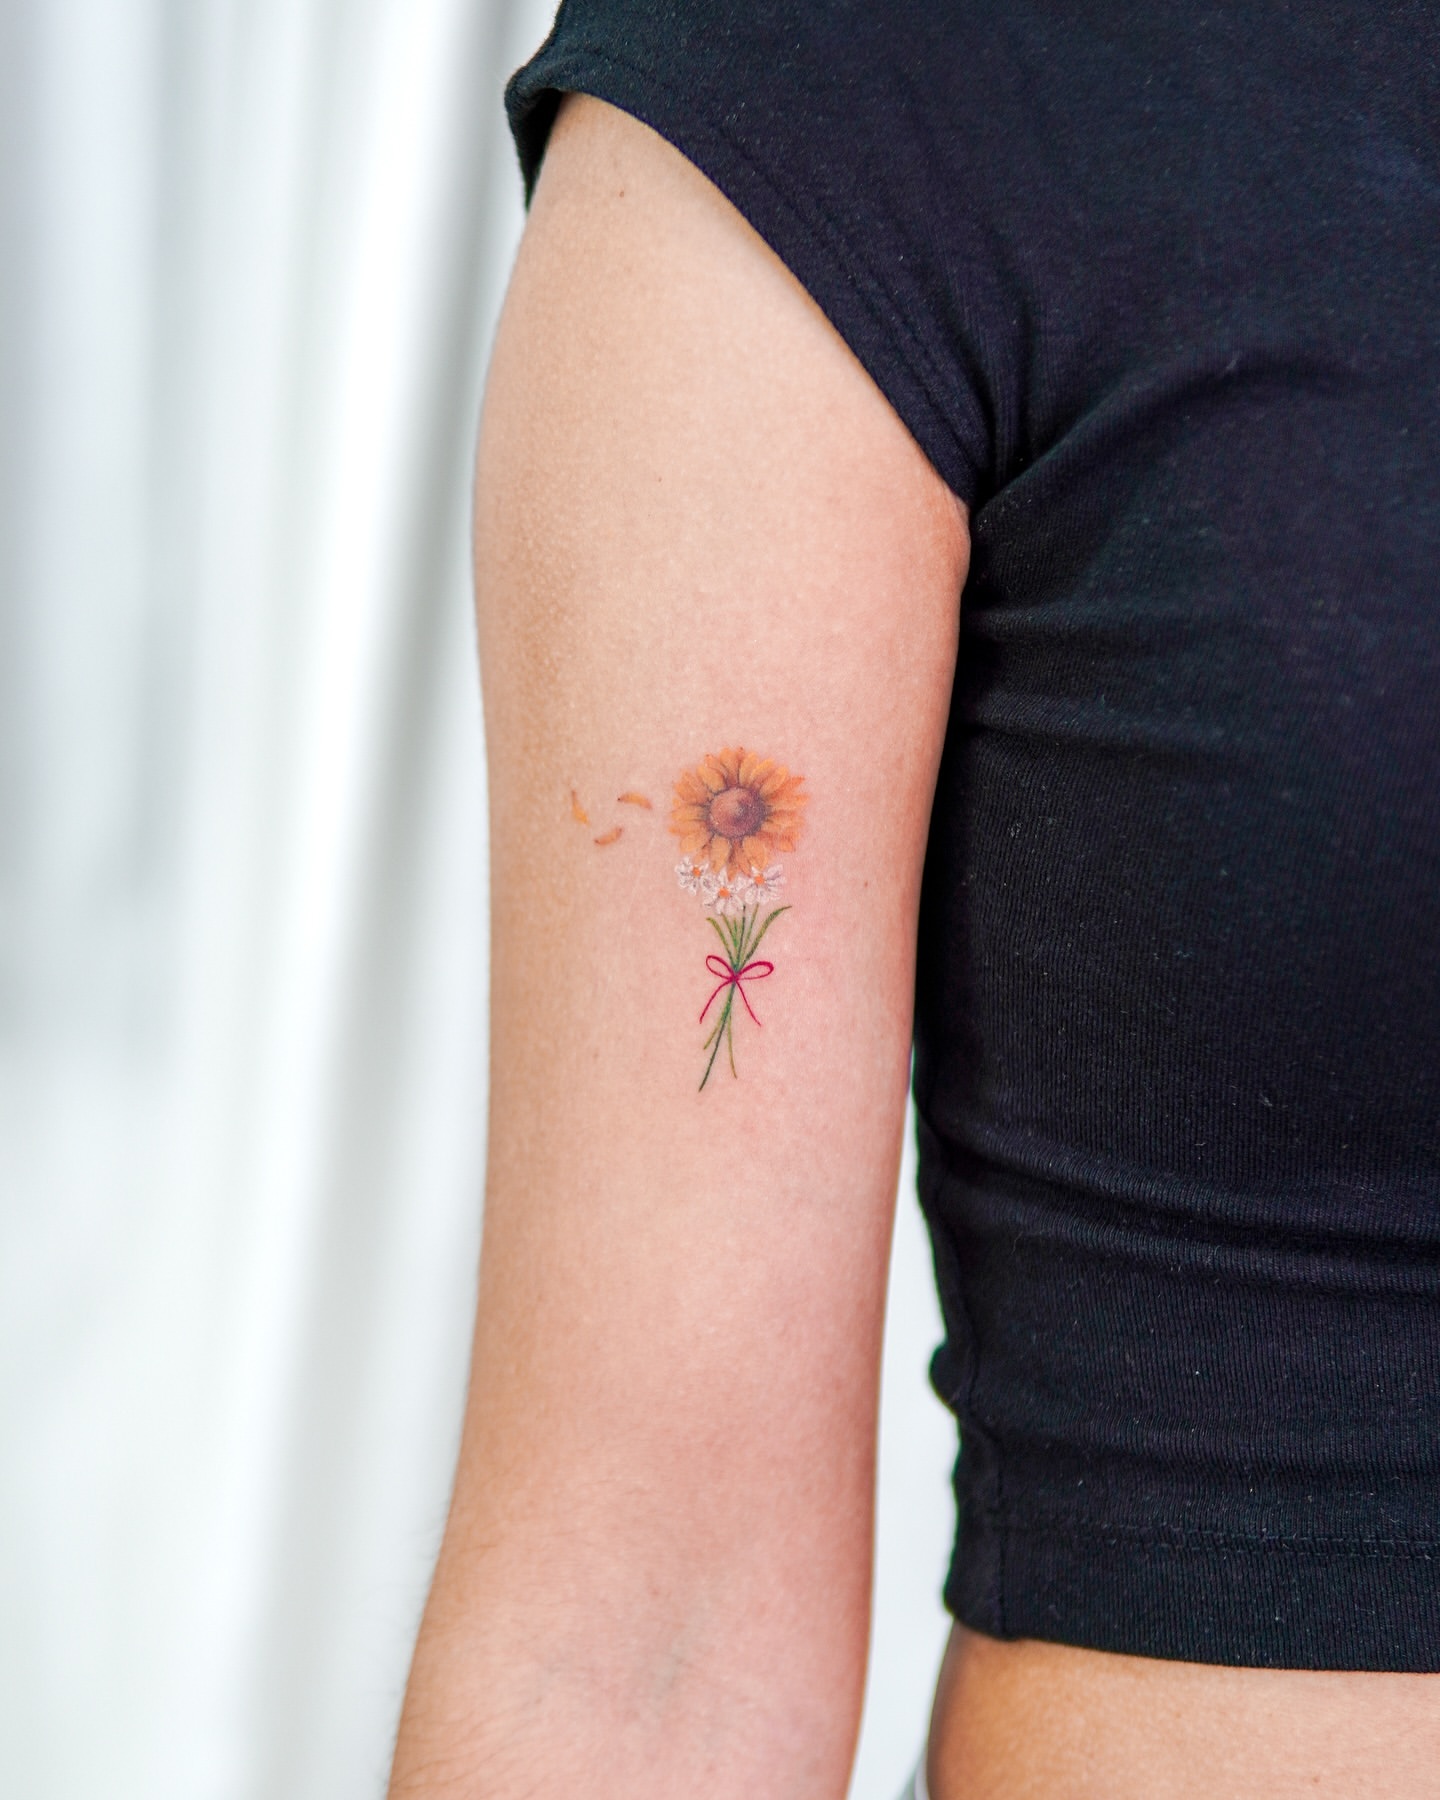 tiny sunflower tattoo